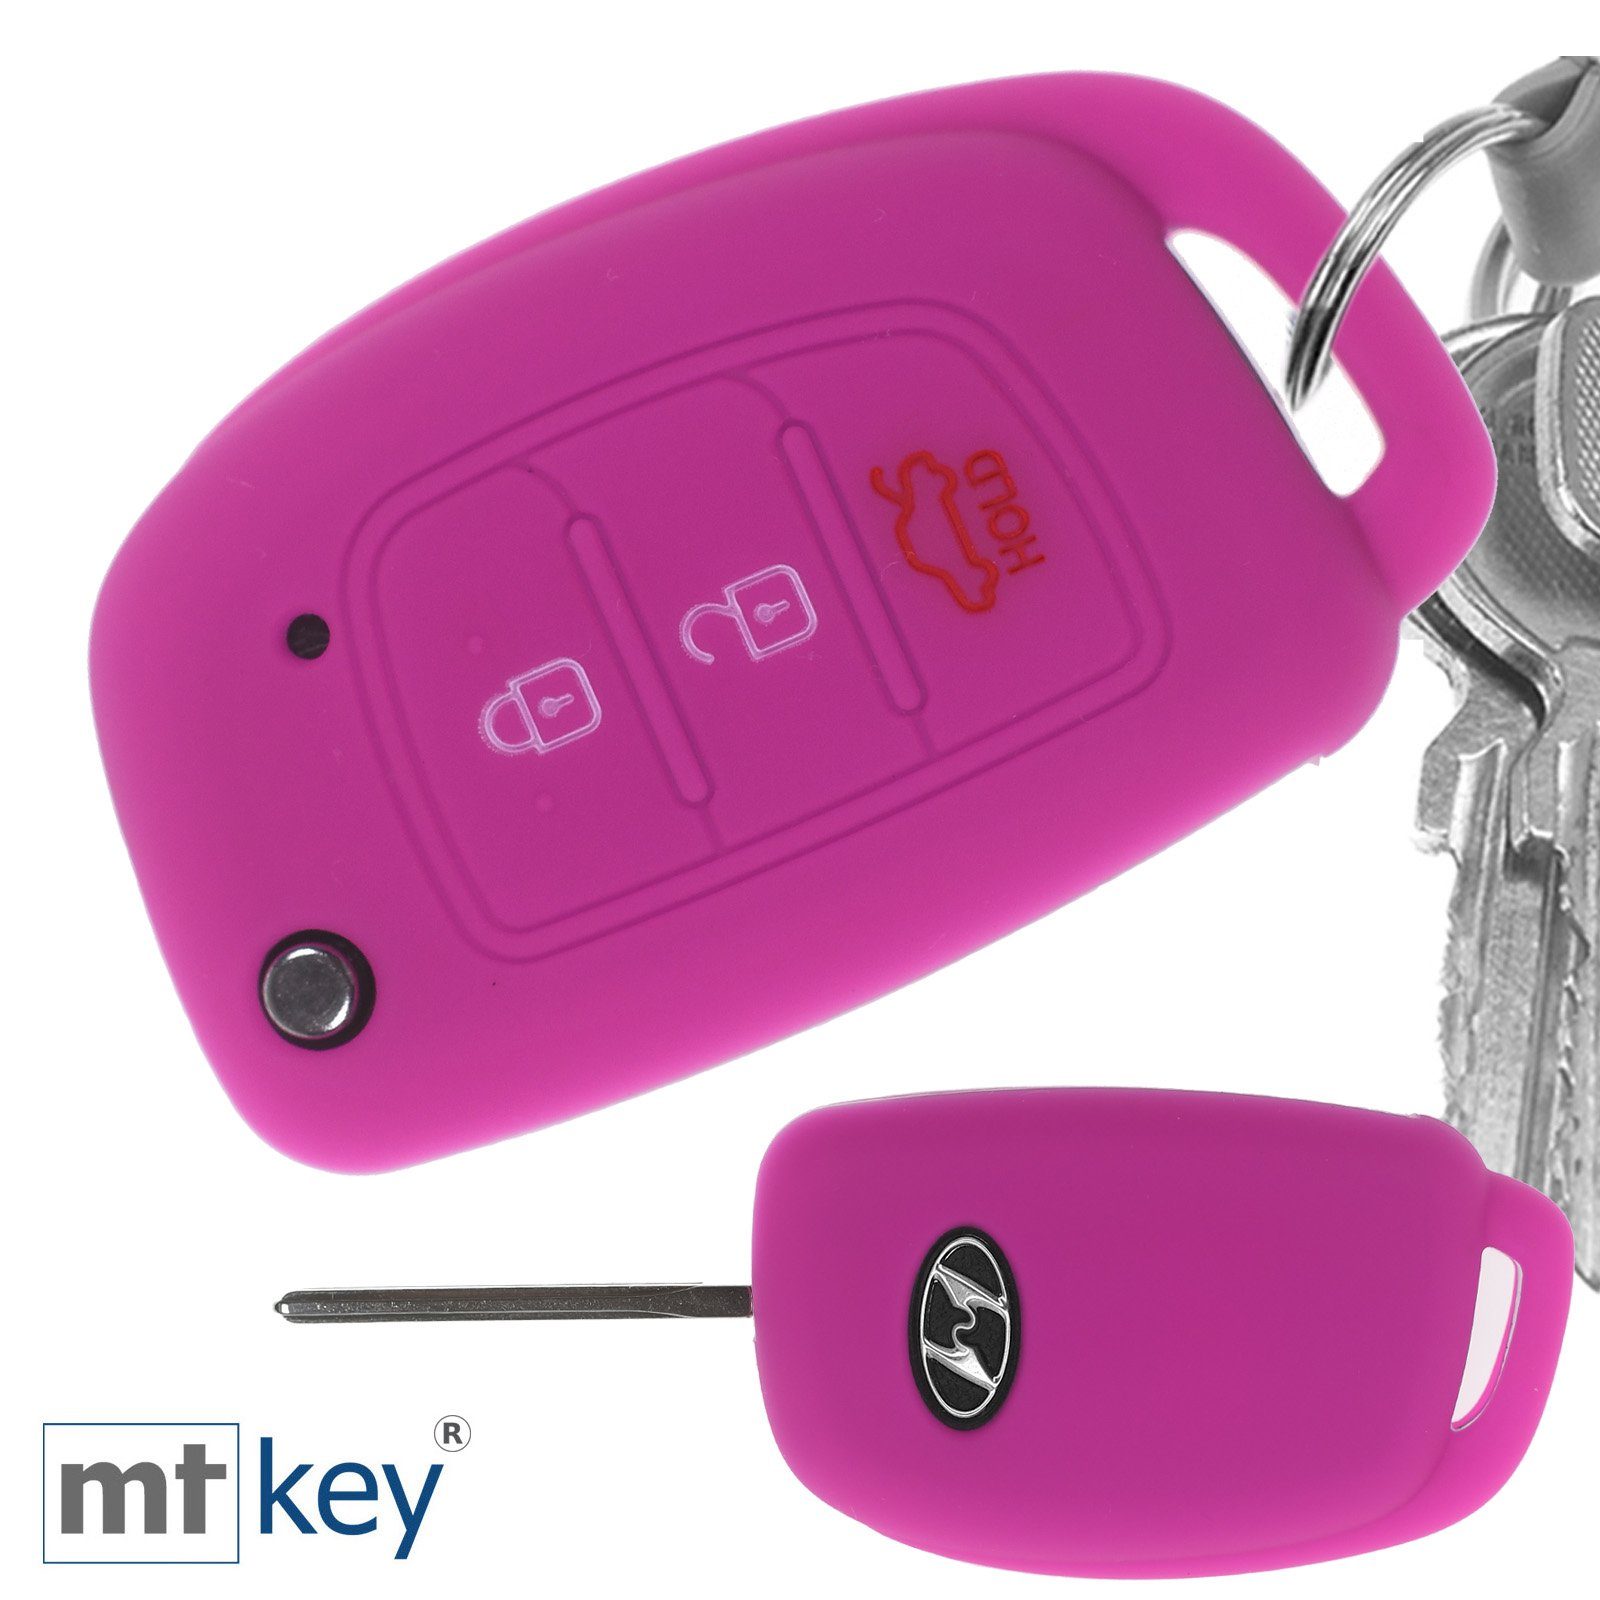 mt-key Schlüsseltasche Autoschlüssel Softcase Silikon Schutzhülle im Wabe Design Pink, für Hyundai i10 i20 ix25 ix35 i40 Accent Tucson 3 Knopf Klappschlüssel